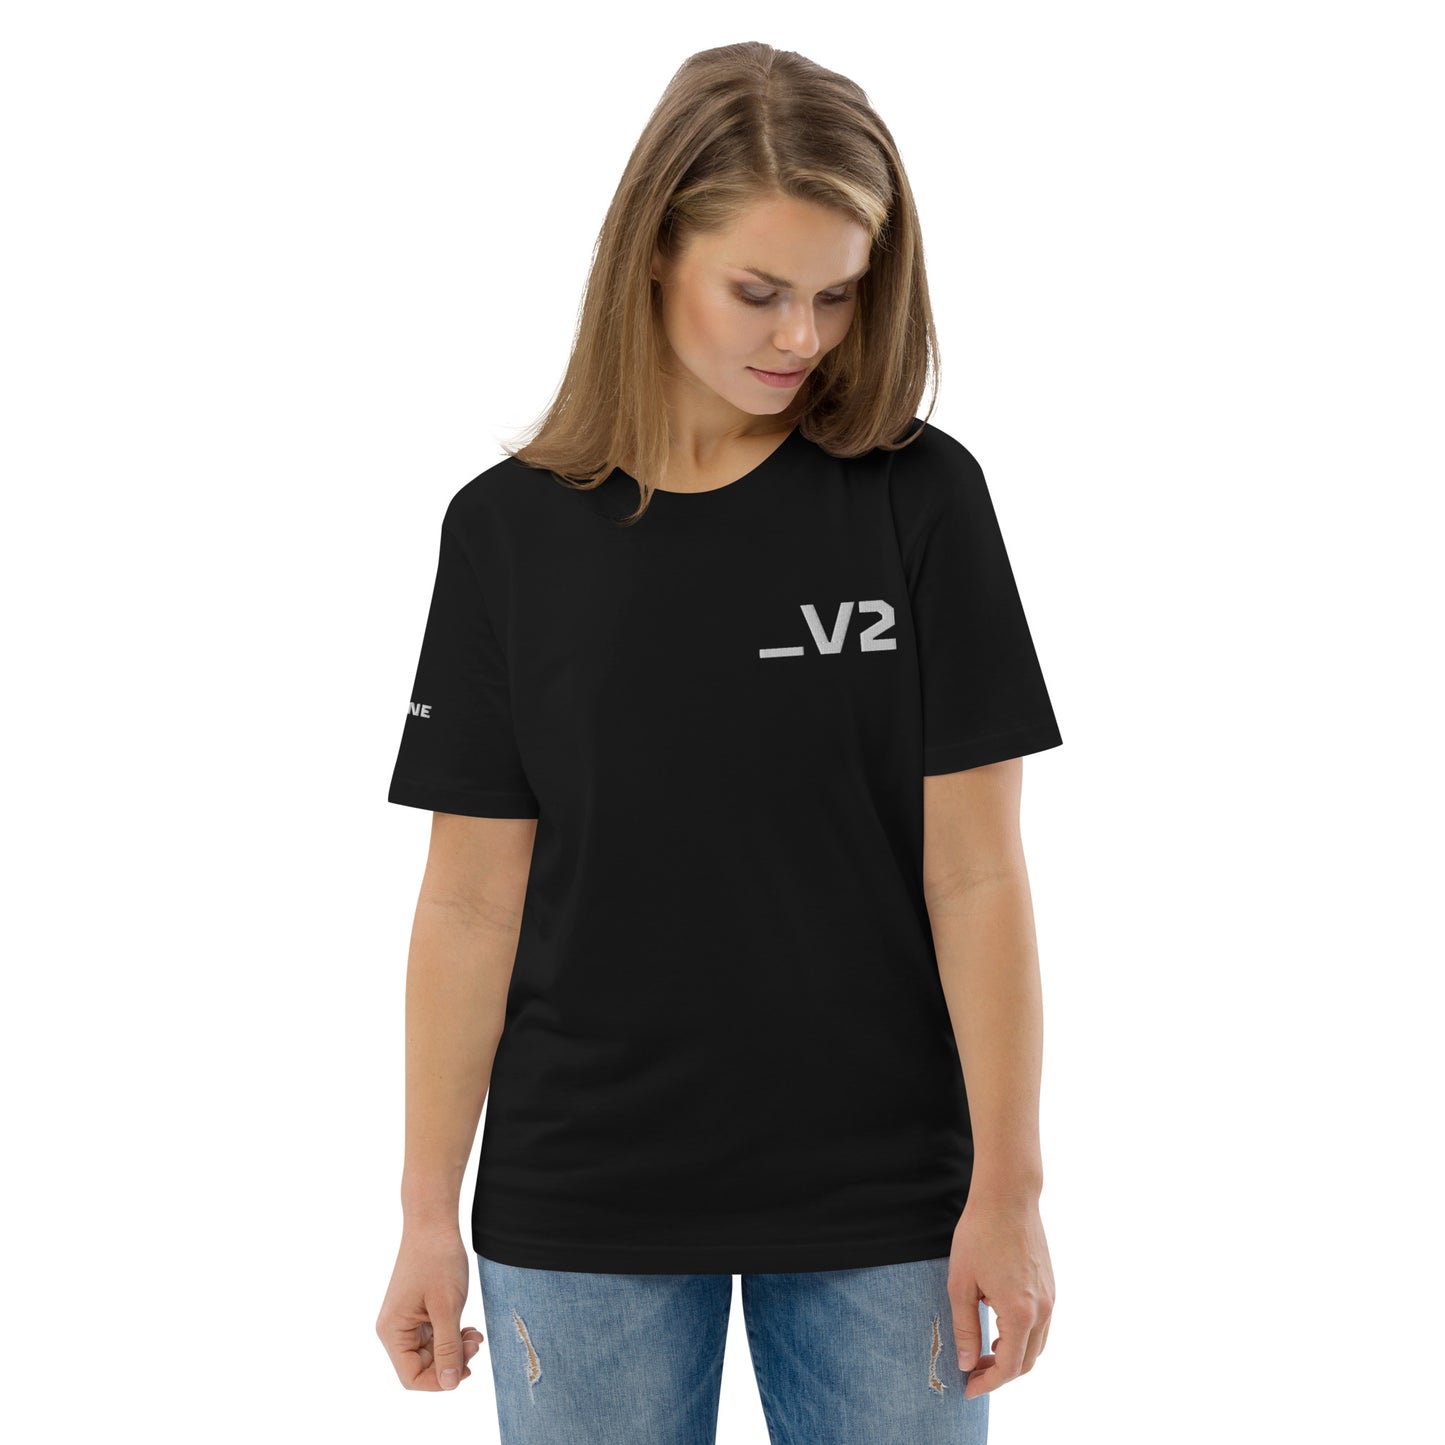 _V2 Embroidered Unisex organic cotton t-shirt